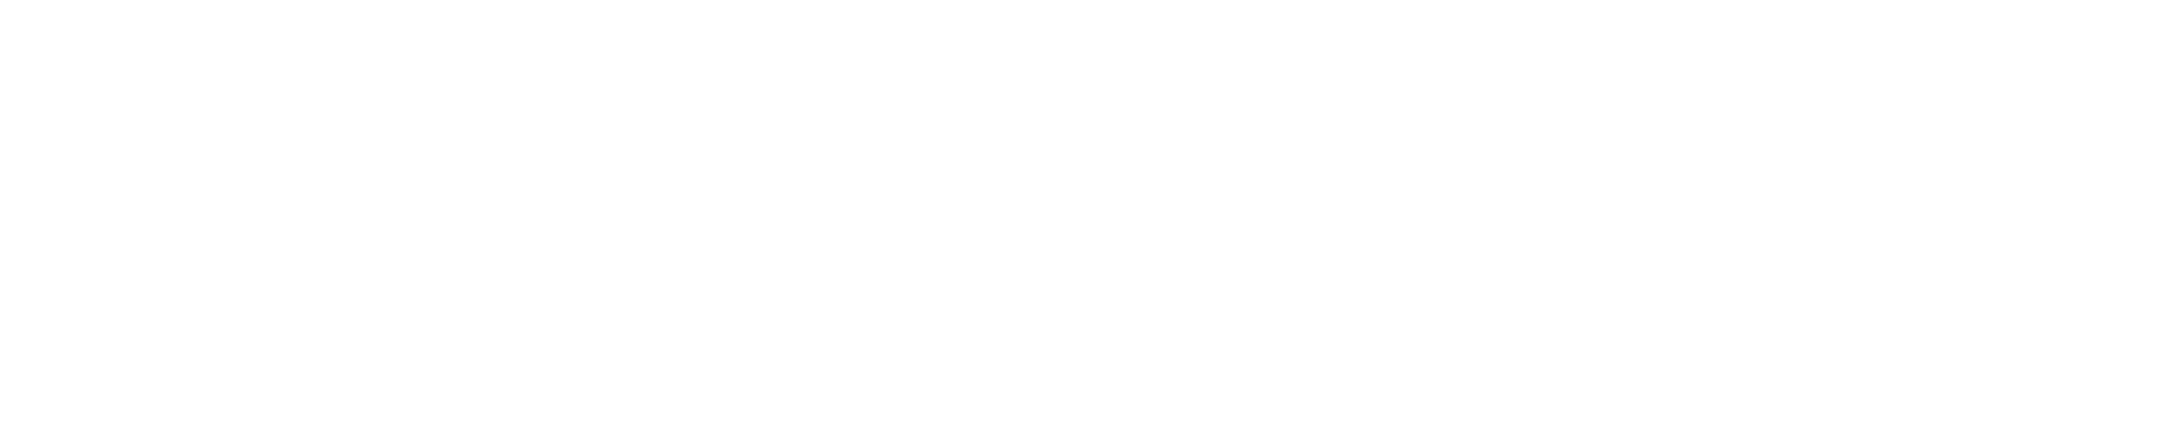 wave image